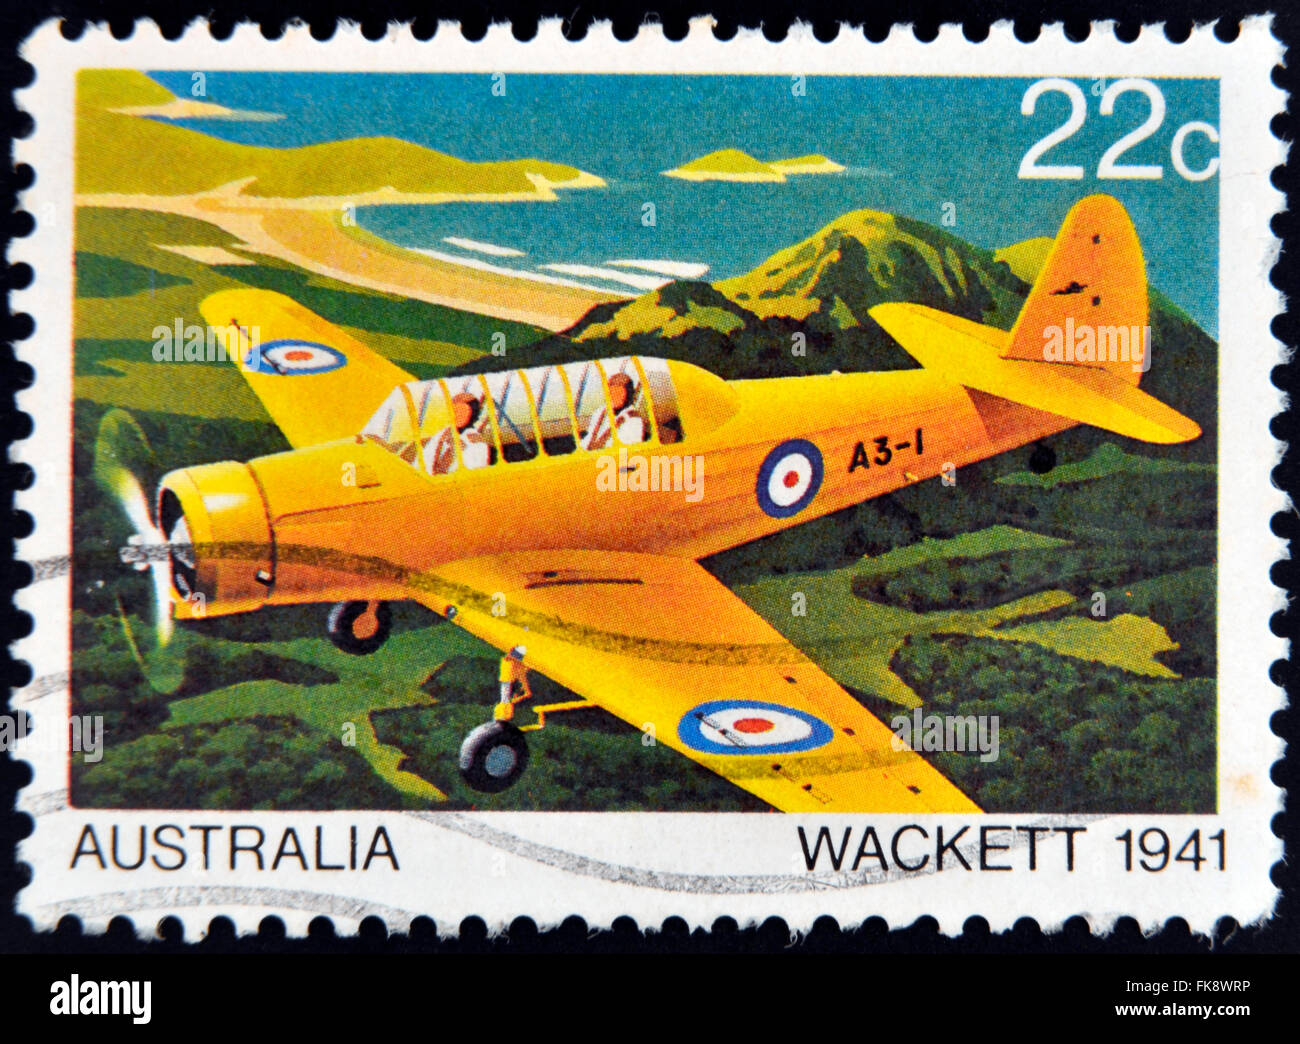 AUSTRALIA - CIRCA 1980: A stamp printed in Australia shows the Wackett trainer aircraft in 1941, circa 1980 Stock Photo